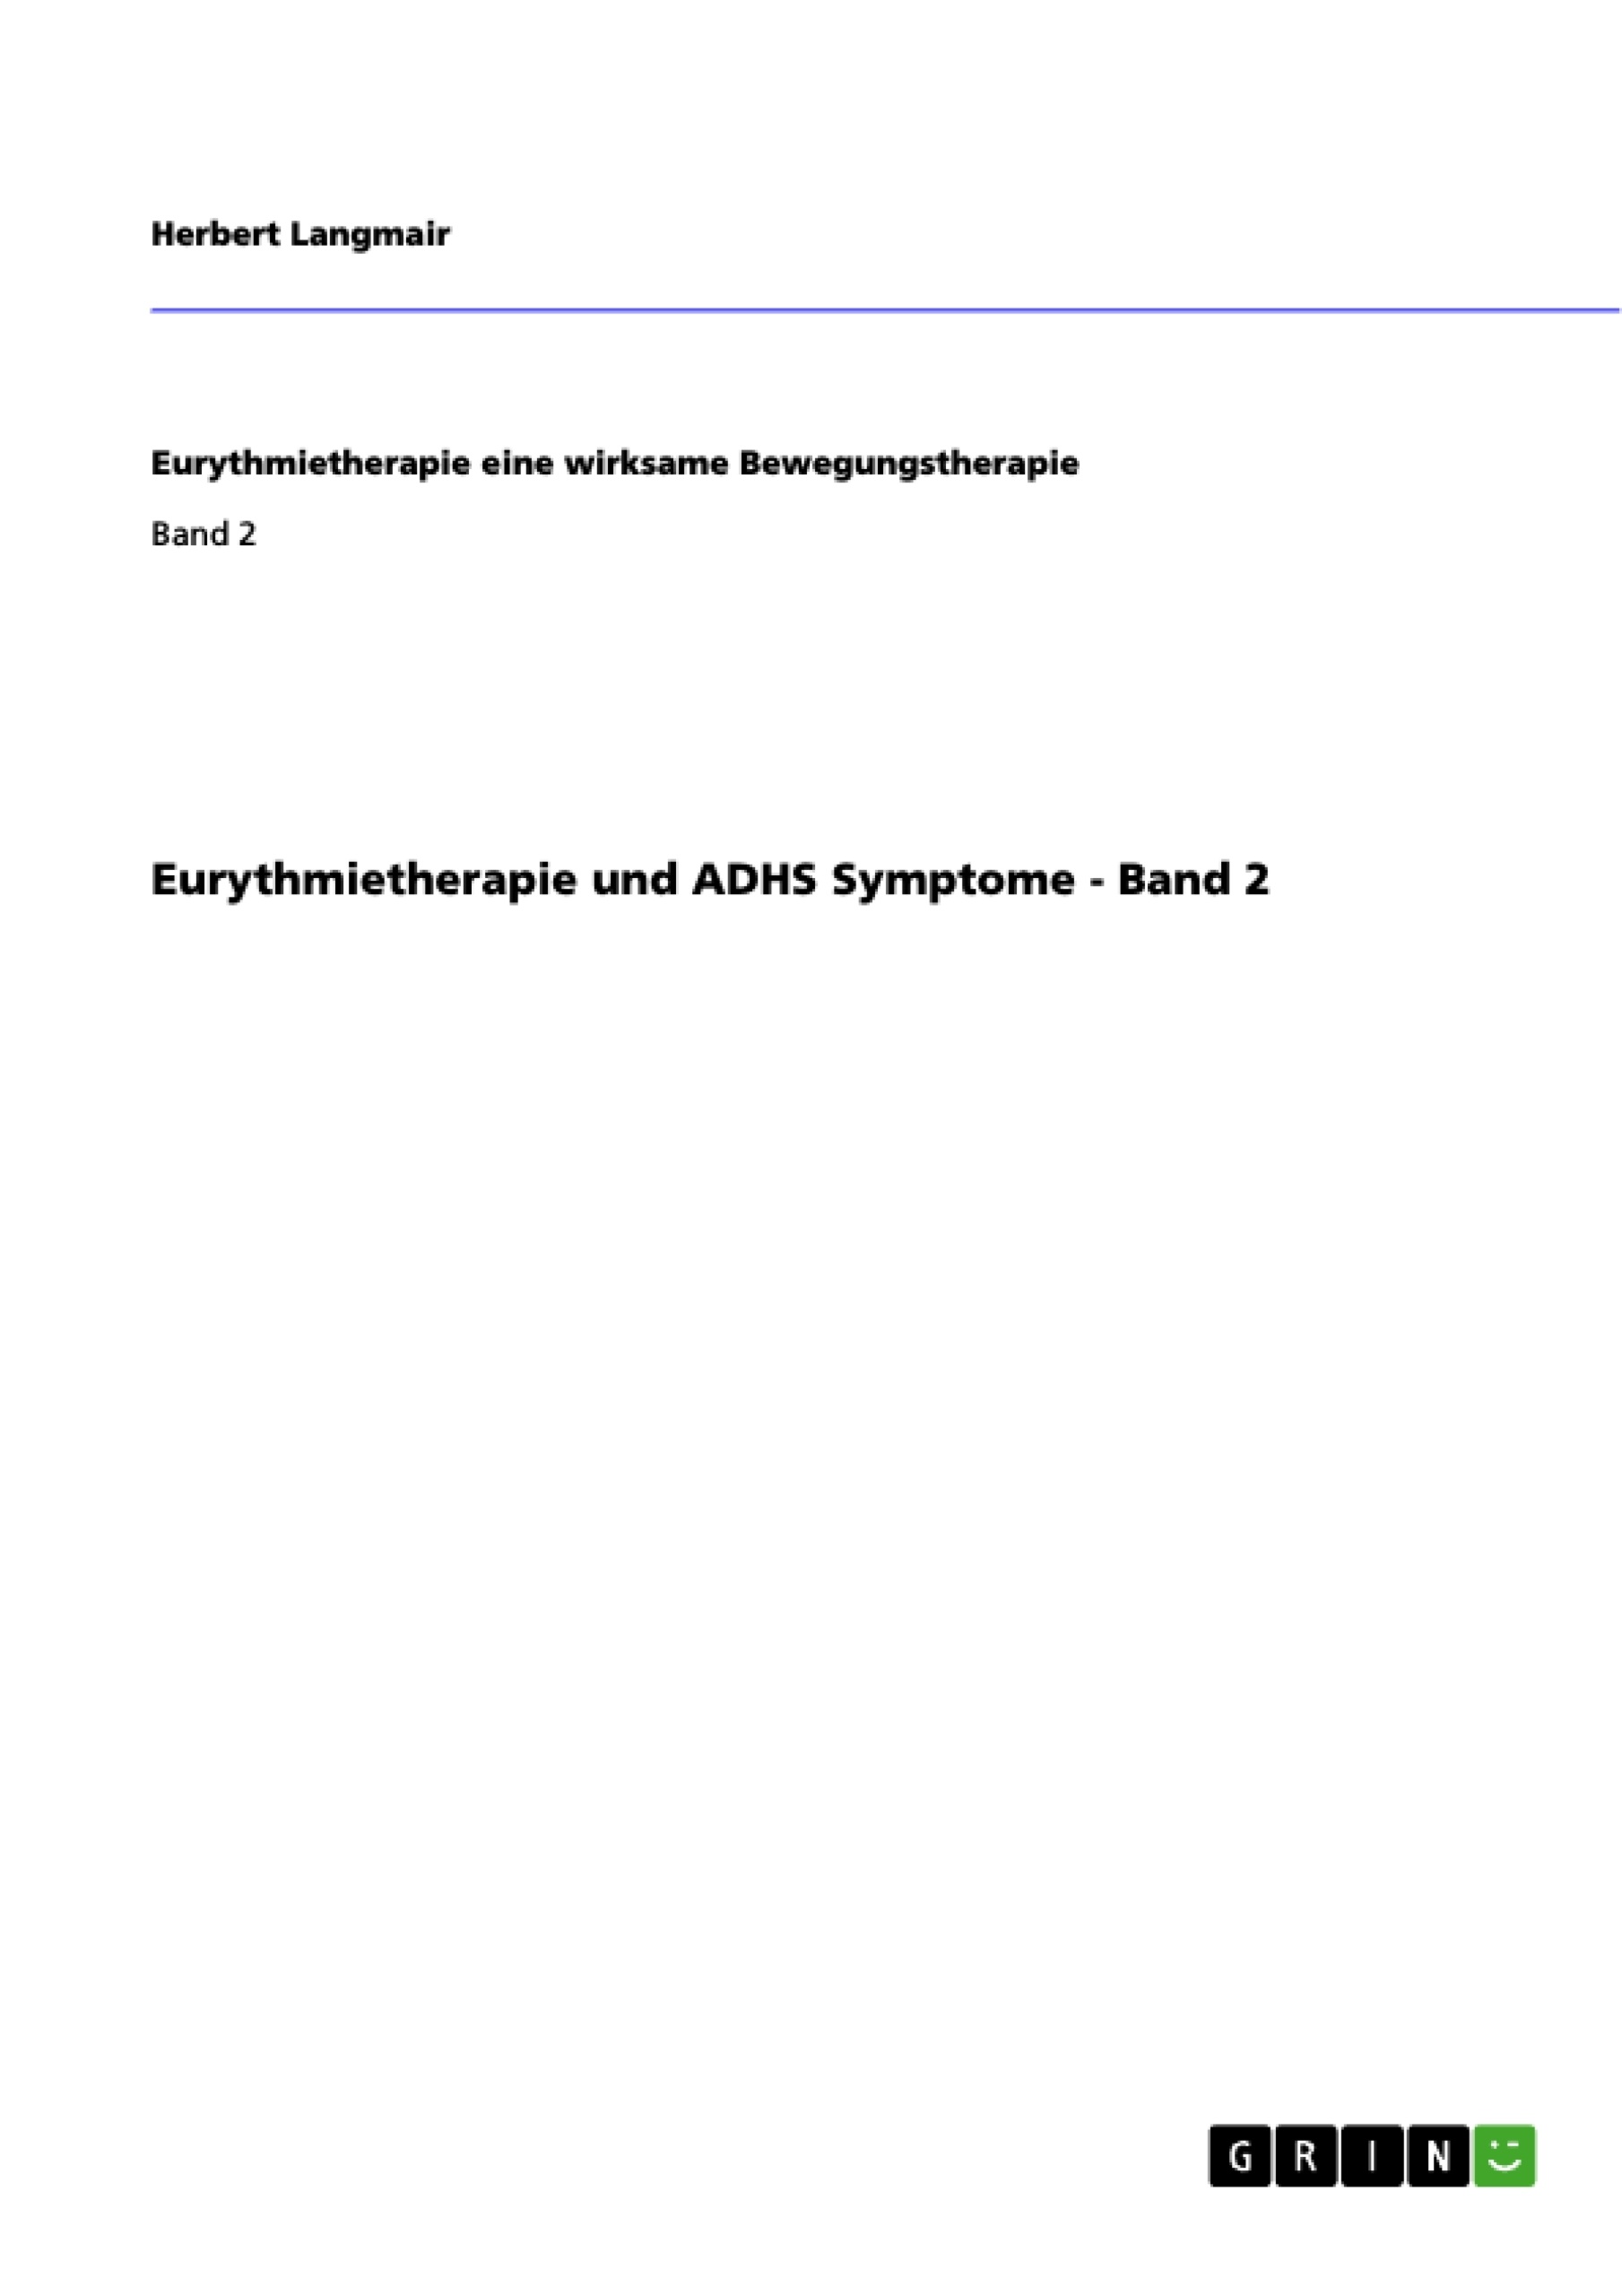 Titre: Eurythmietherapie und ADHS Symptome - Band 2